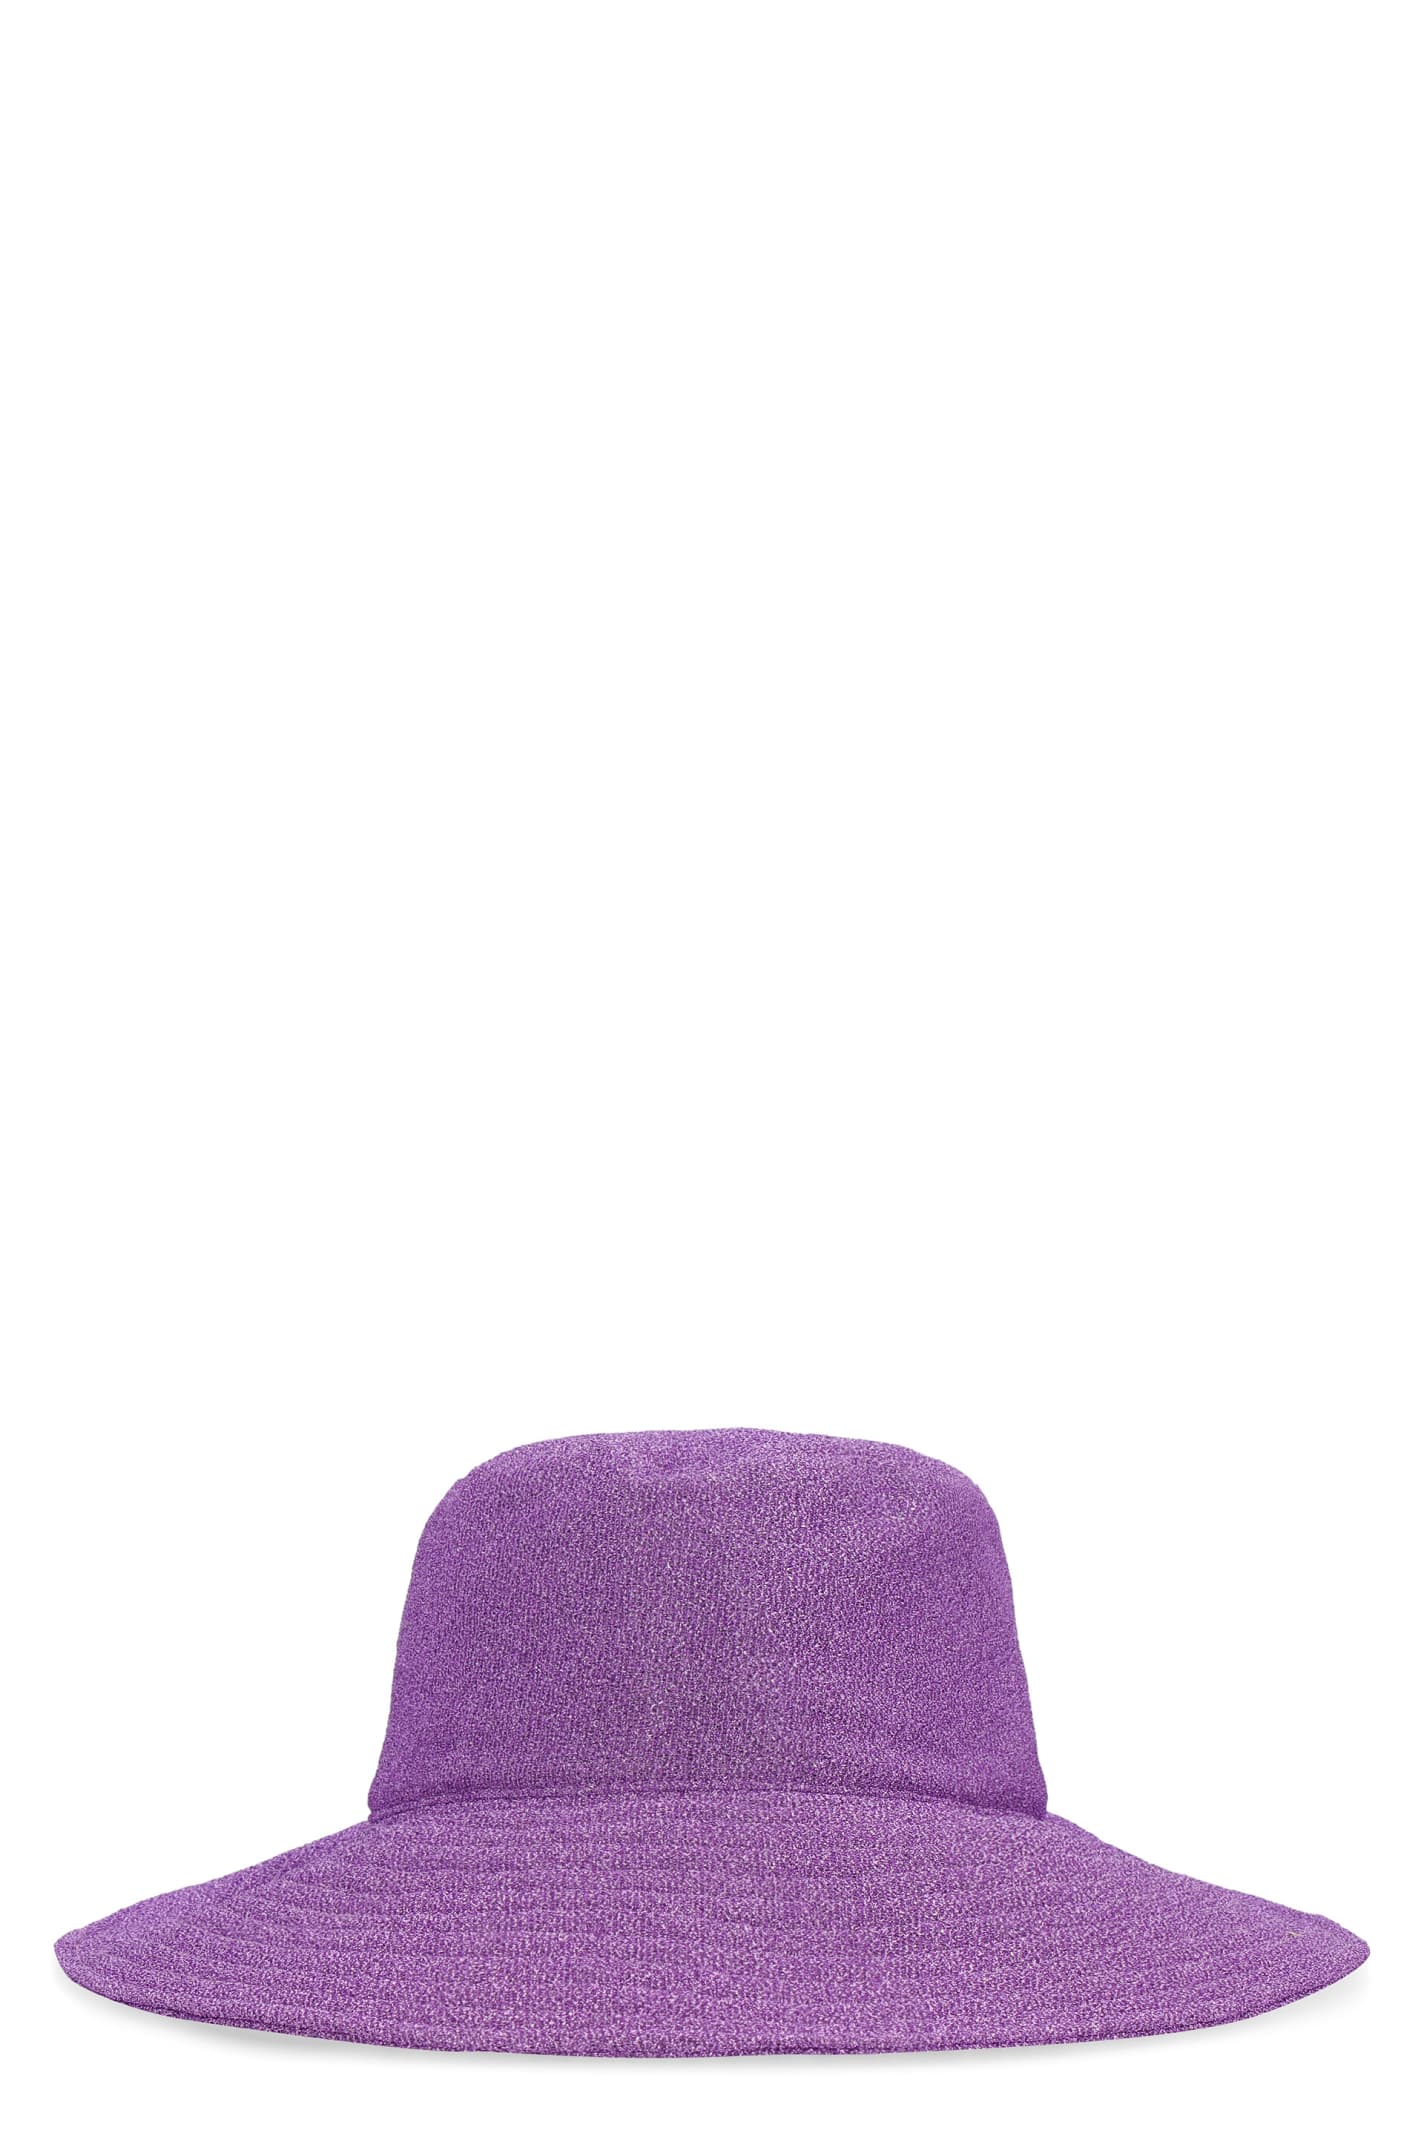 Oseree Lumière Beach Hat